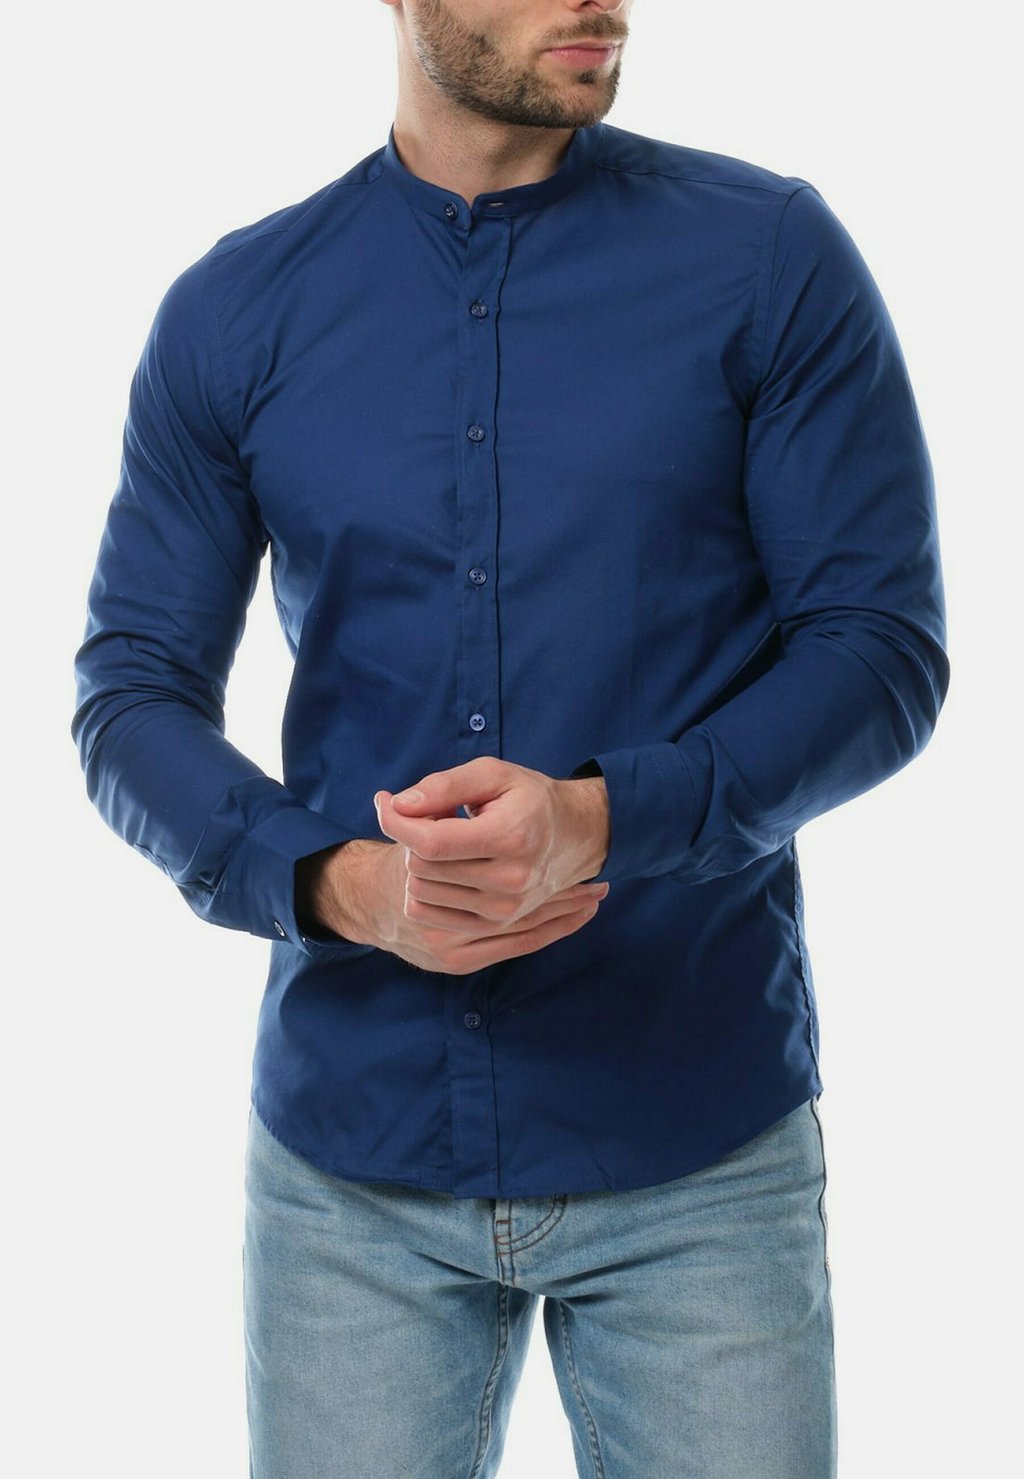 деловая рубашка long sleeved cvc ac Рубашка LONG-SLEEVED Hopenlife, синий